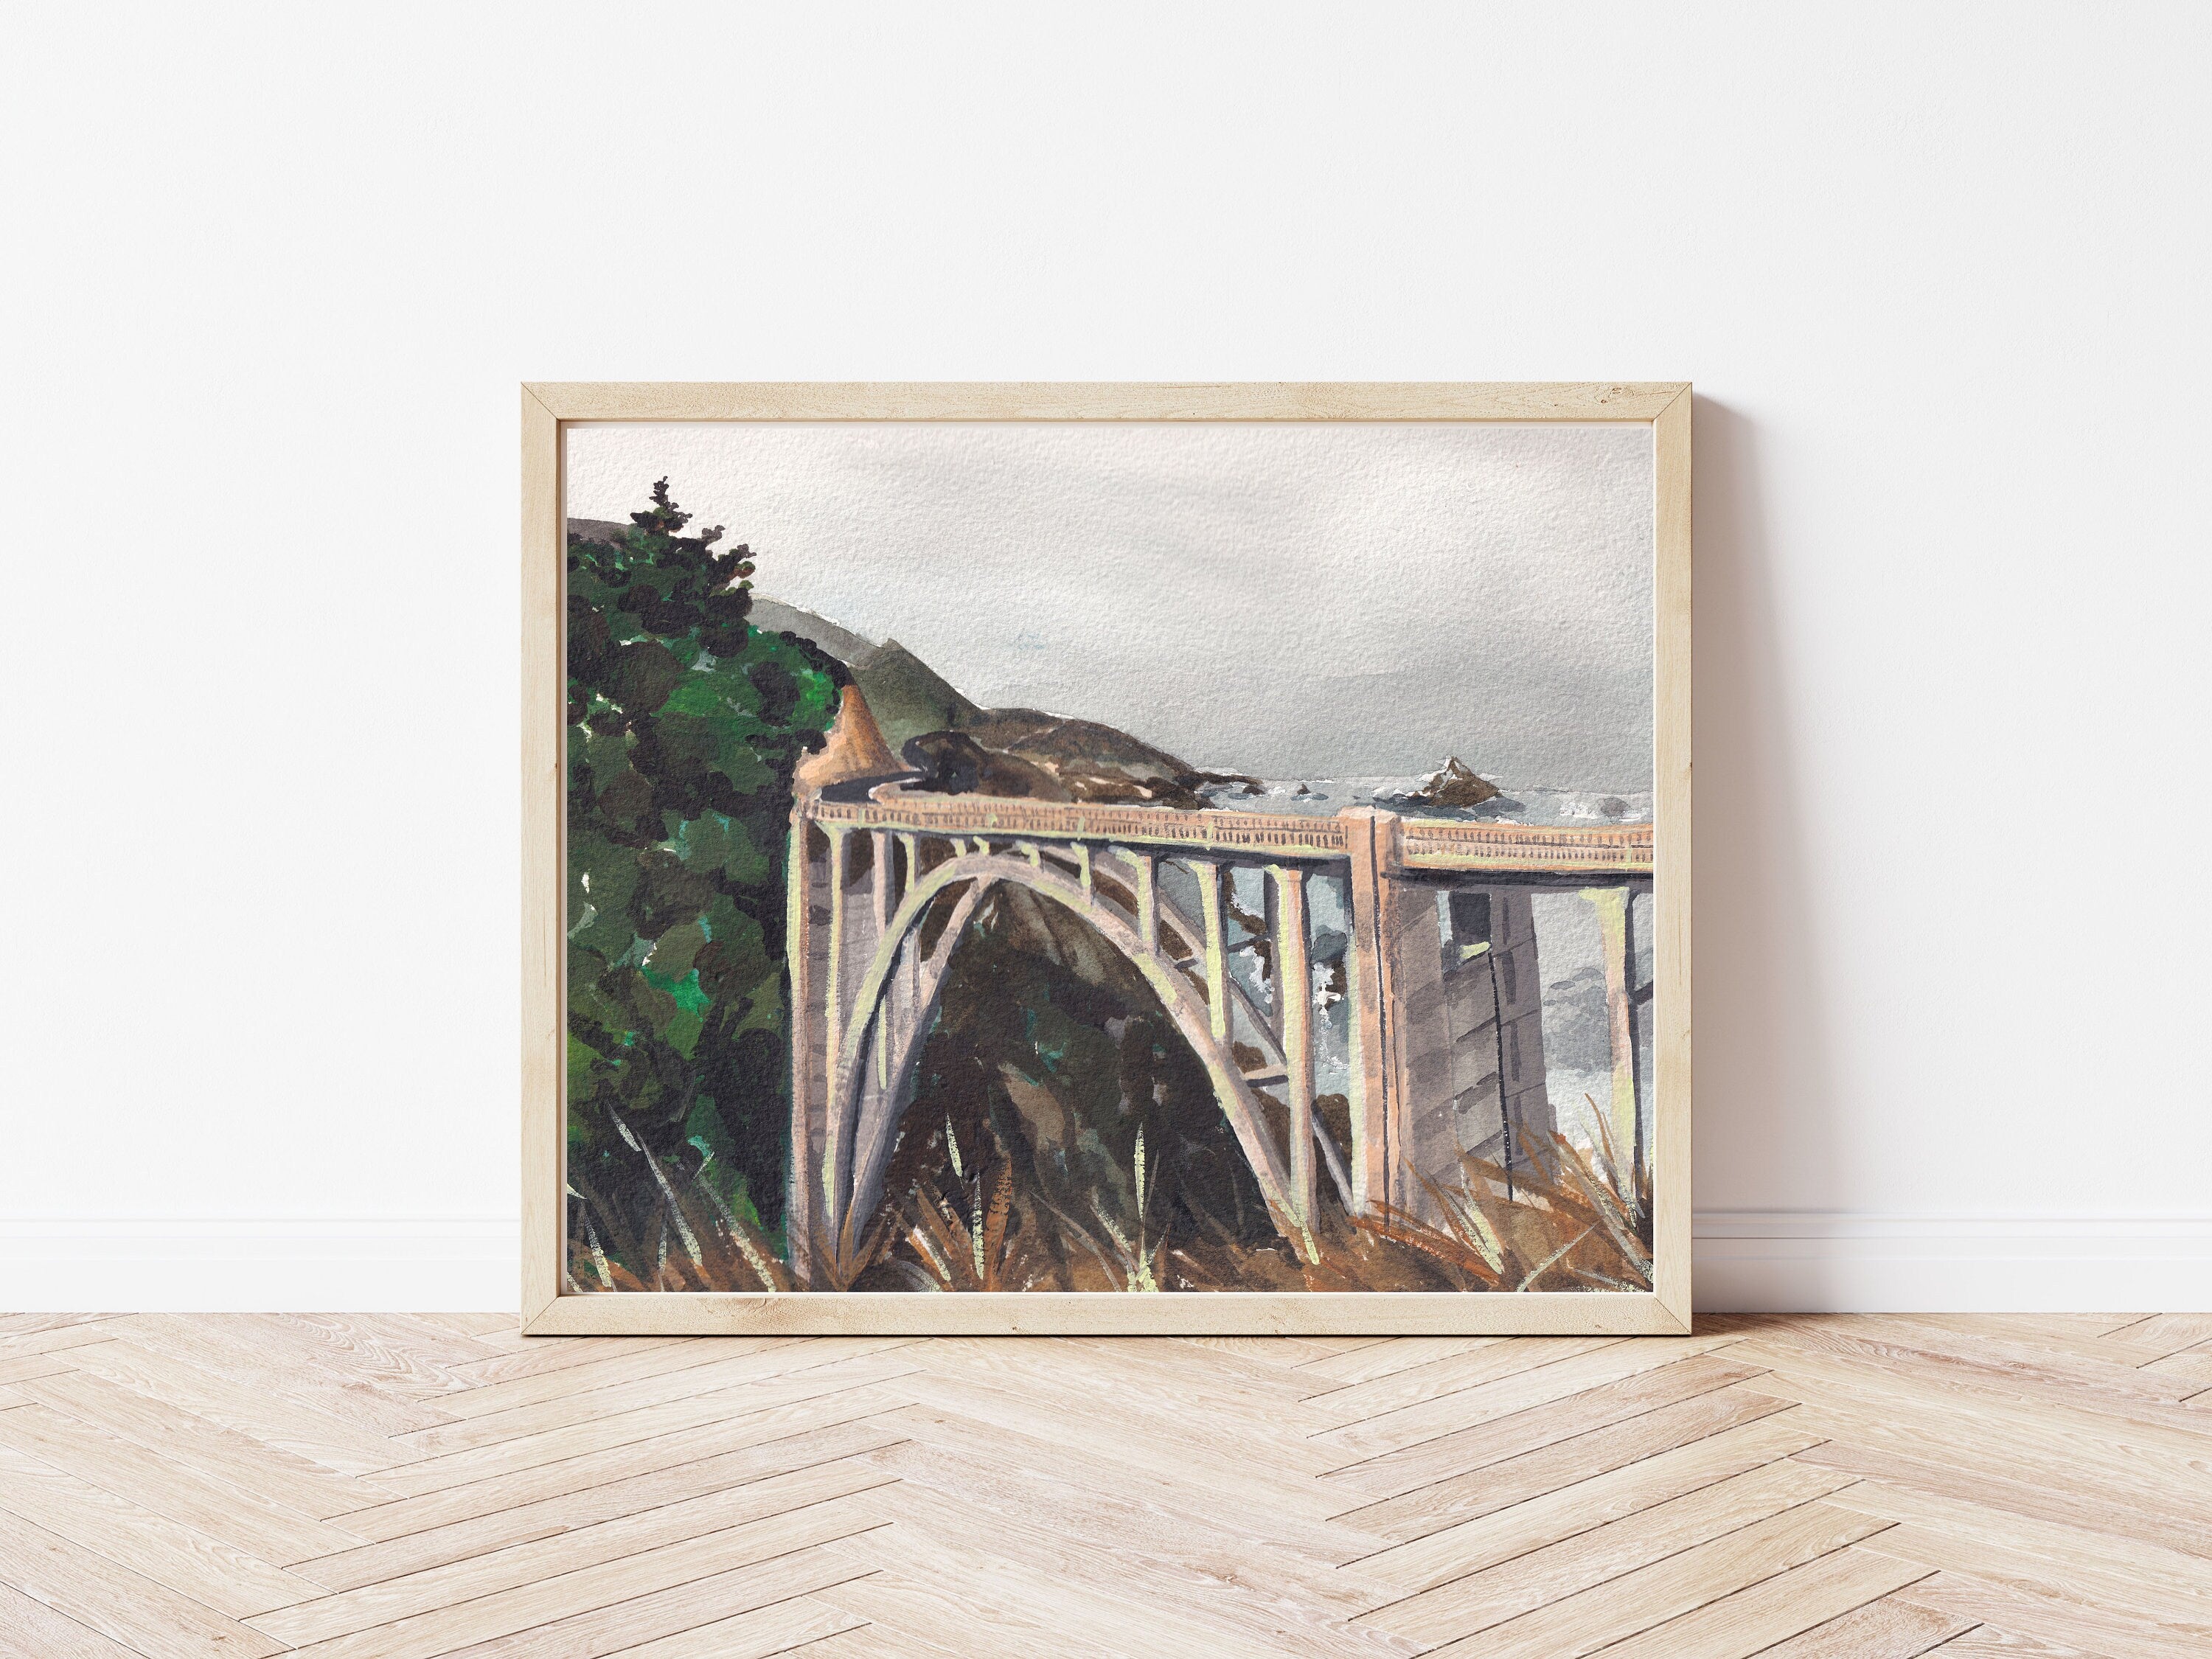 Bixby creek bridge print of painting by Medjool Studio. Print of original gouache painting featuring the Bixby Bridge in Big Sur California and landscape with greenery.